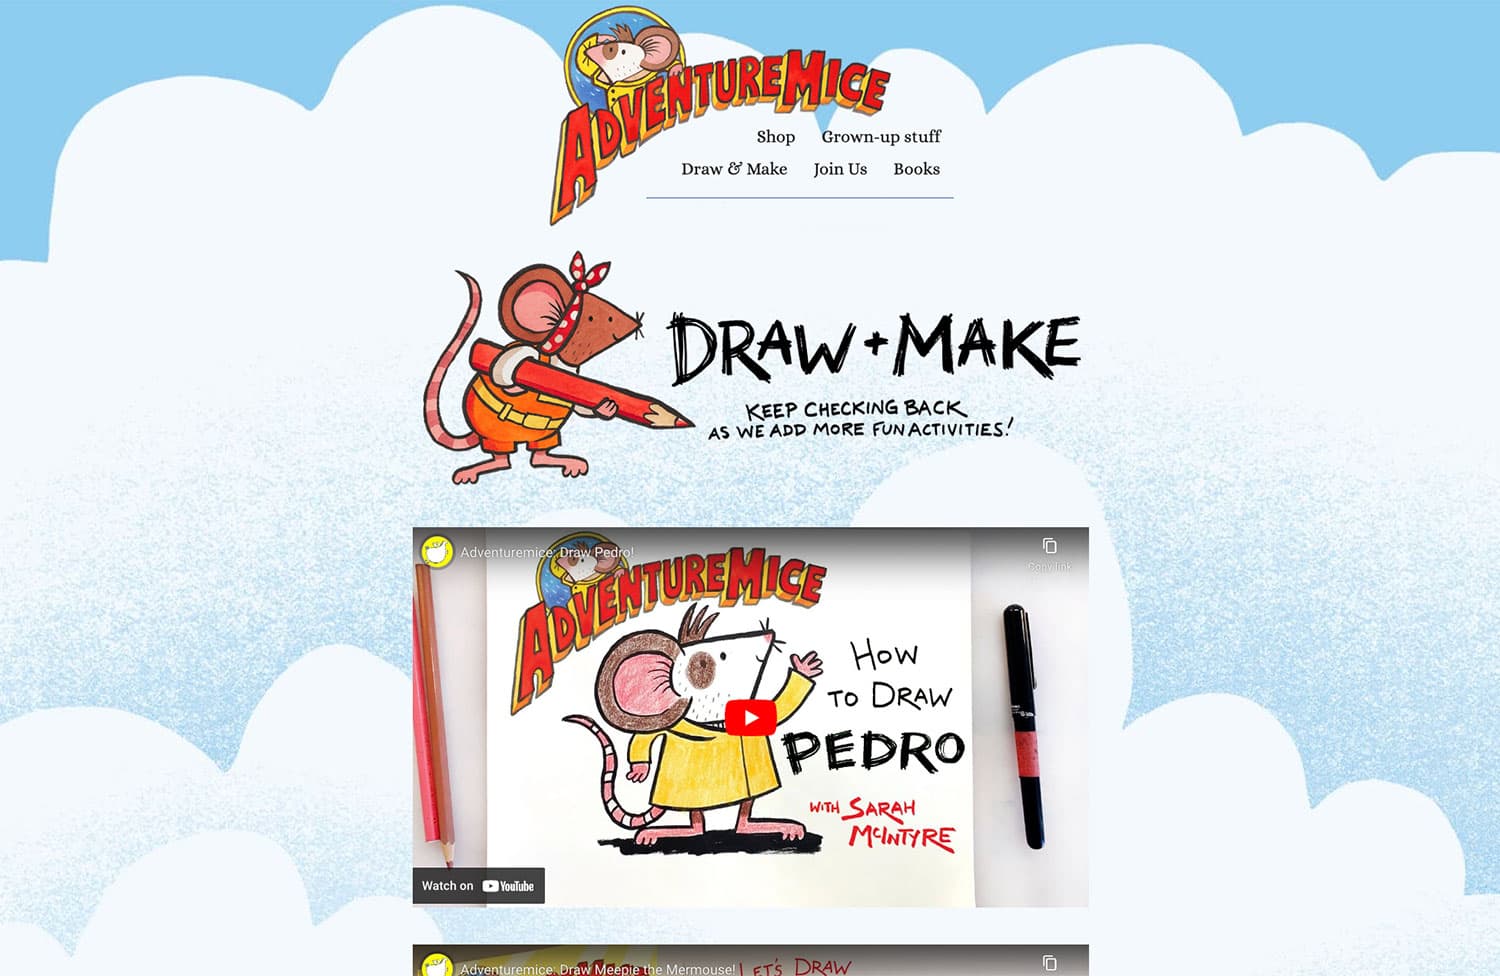 Adventuremice - Draw & Make